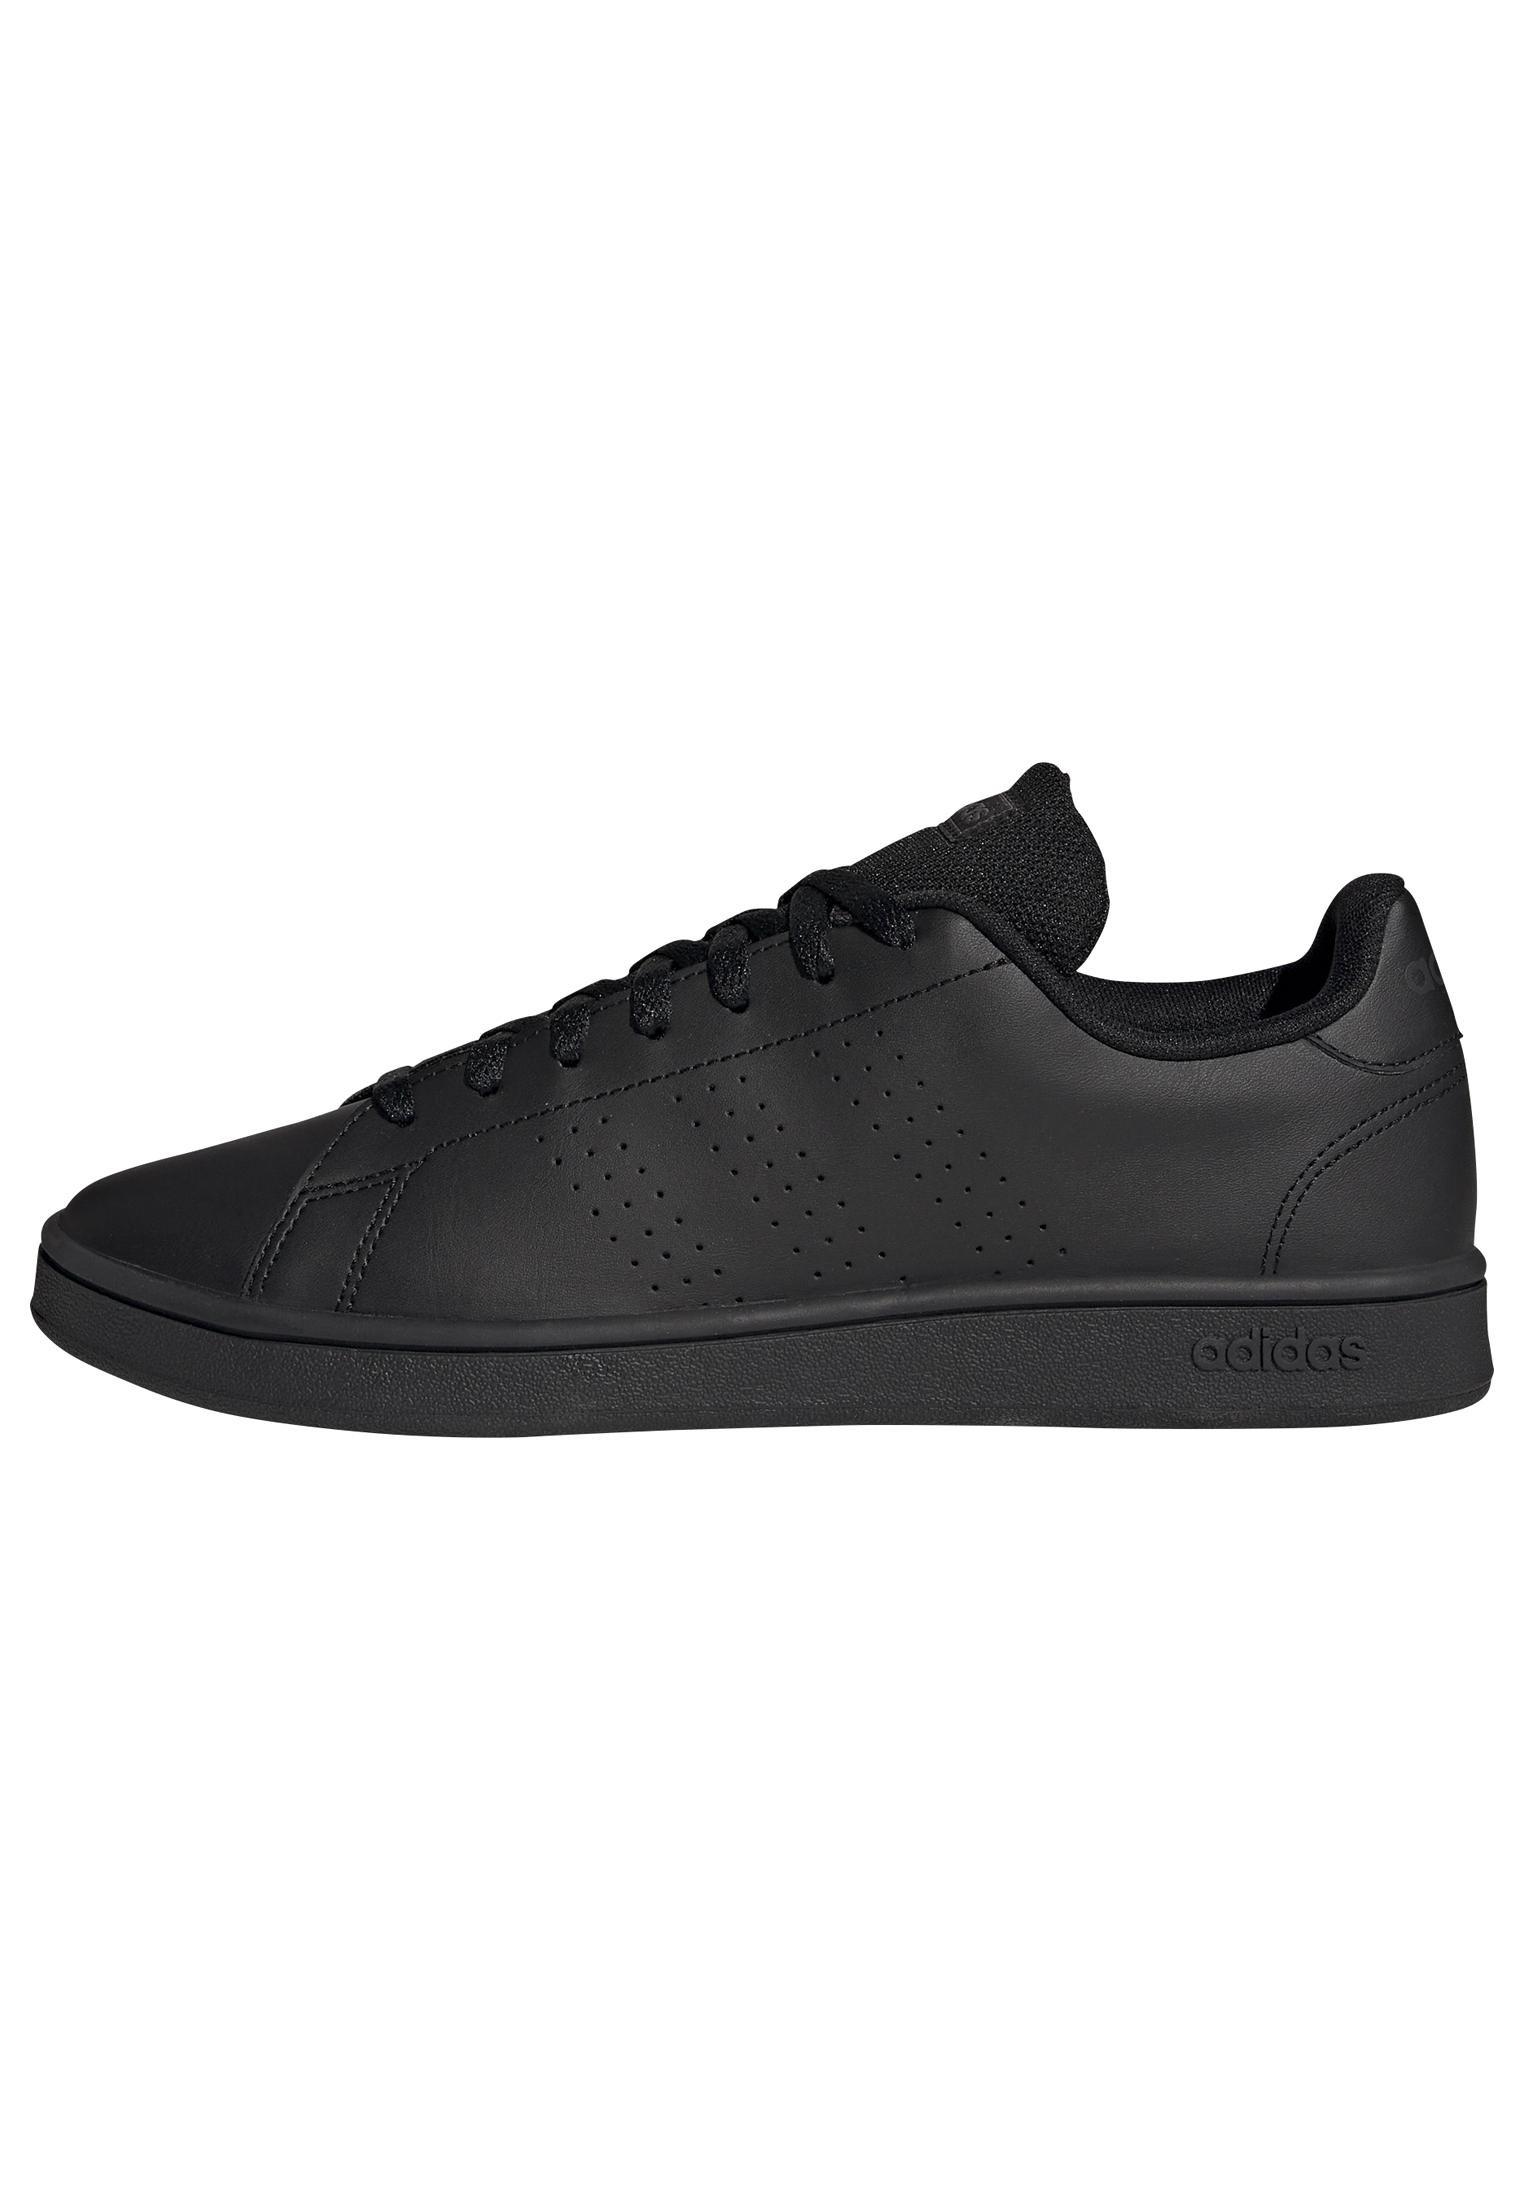 adidas - Men Advantage Base Court Lifestyle Shoes, Black